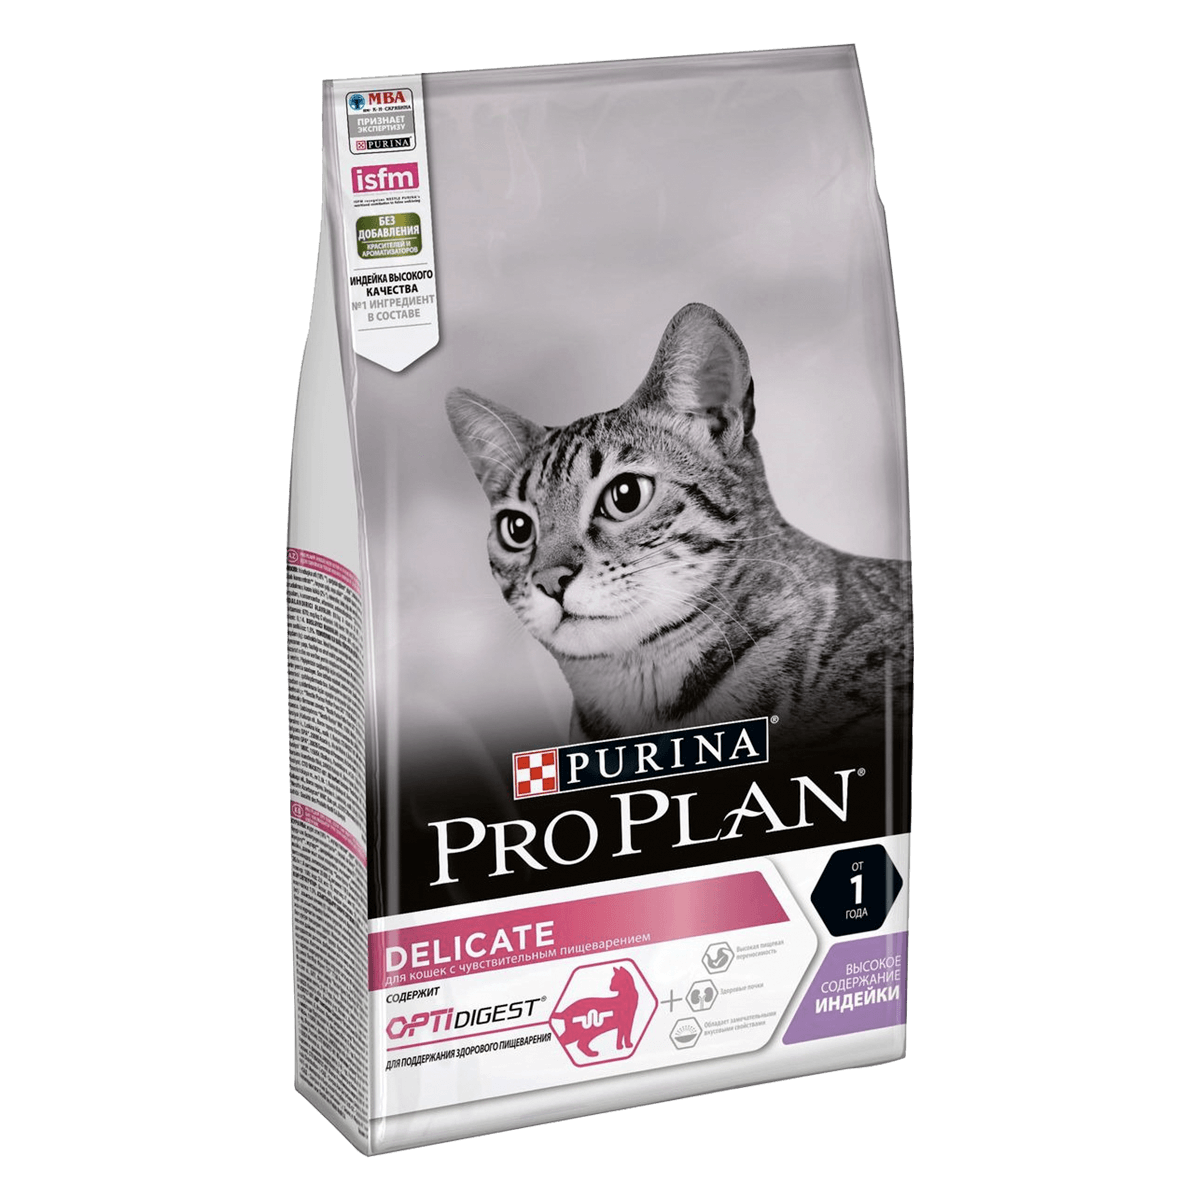 Purina Pro Plan Cat Adult Delicate Sensitive Turkey, 10 кг - корм Пурина для кошек с проблемами пищеварения